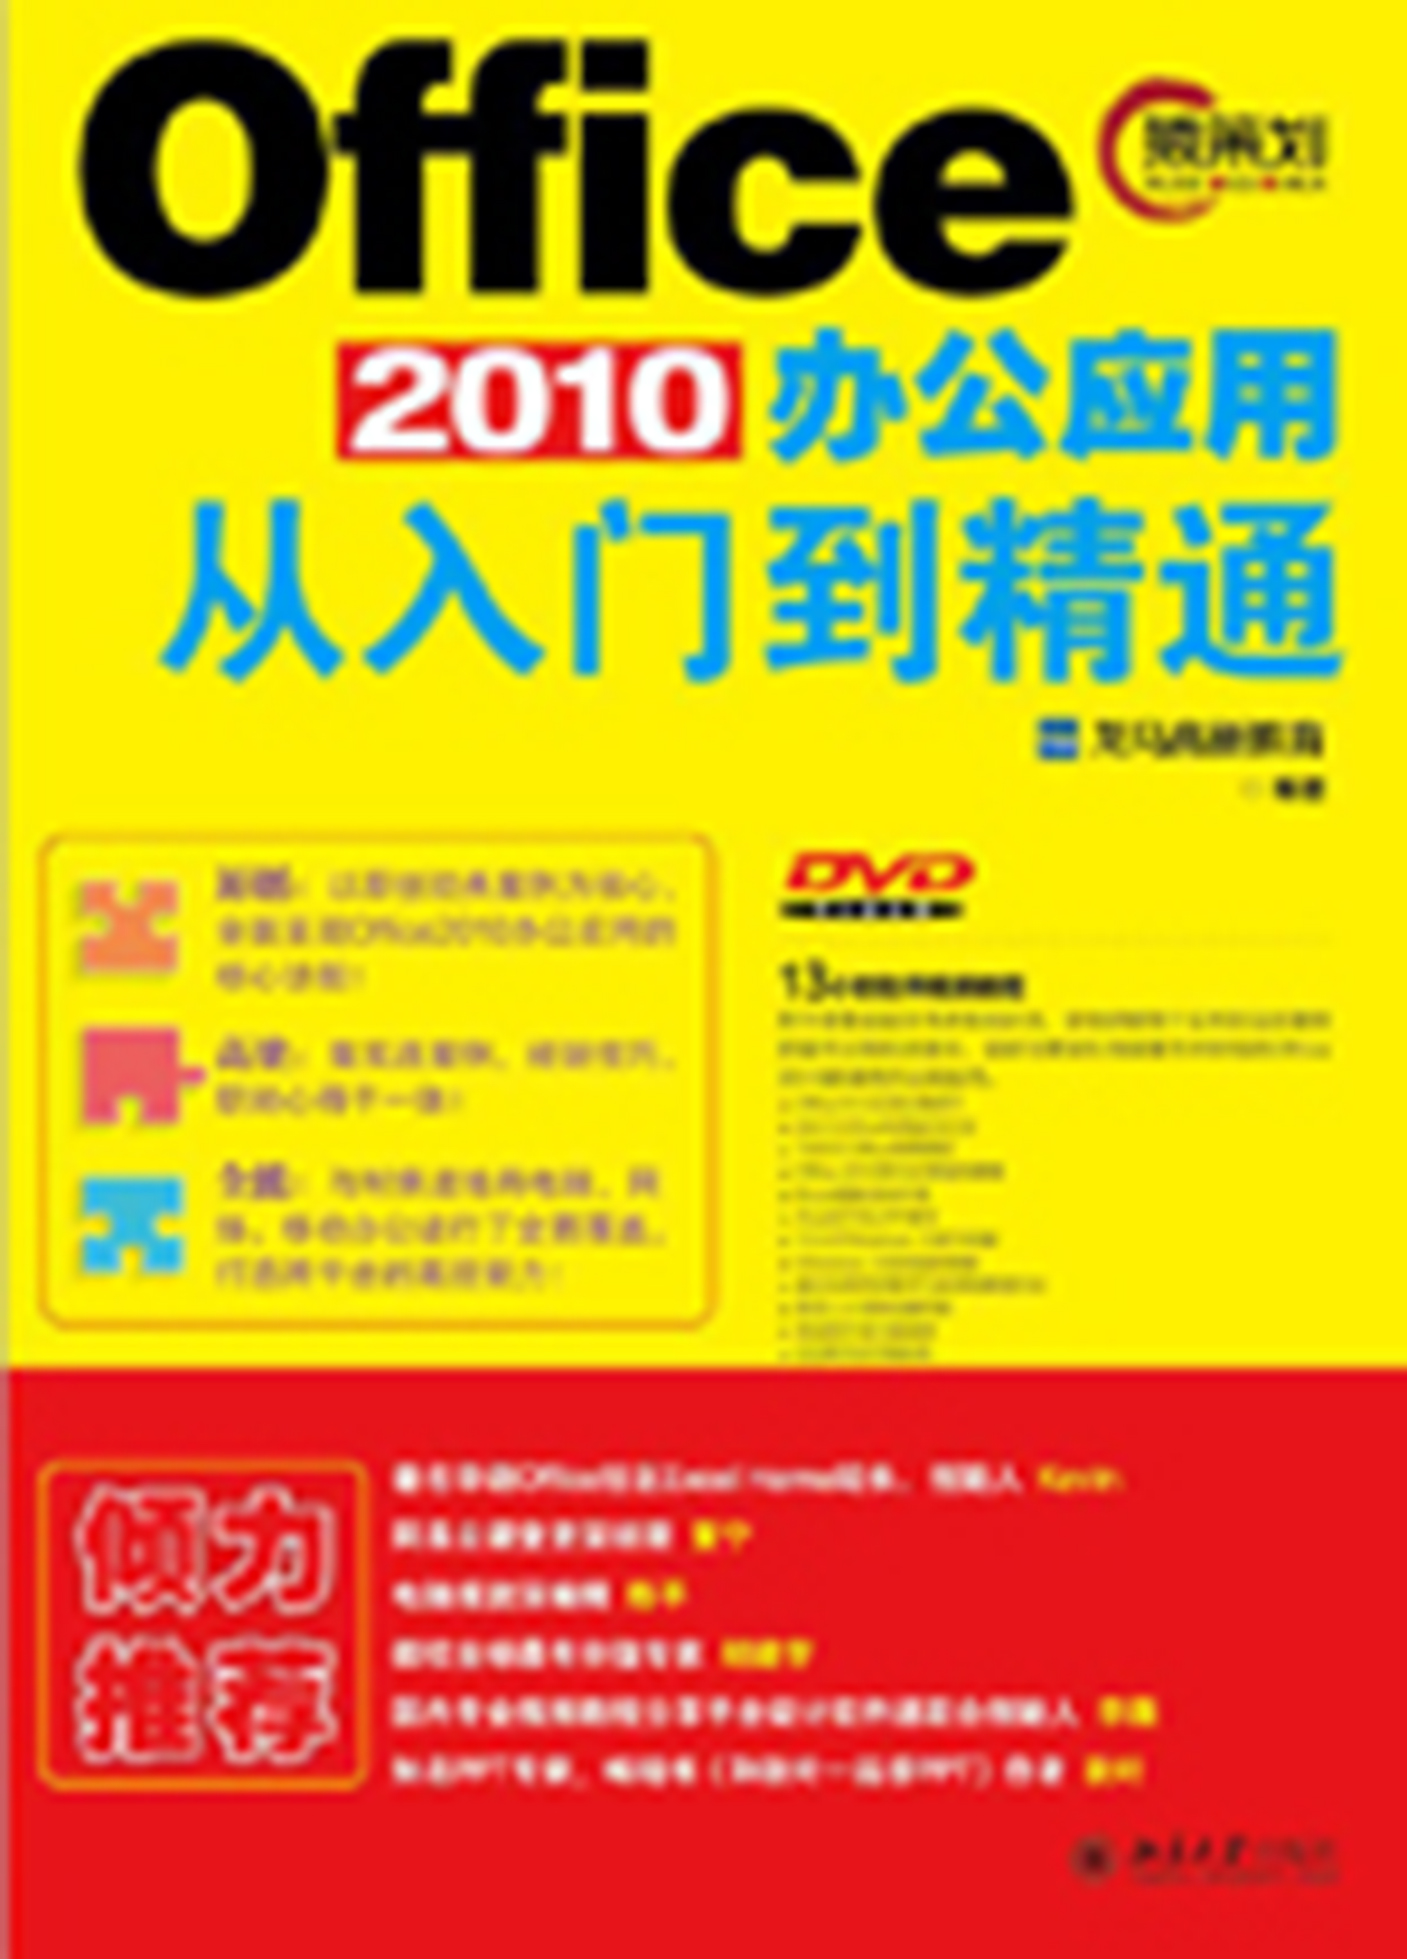 Office 2010辦公套用從入門到精通(北京大學出版社出版圖書)